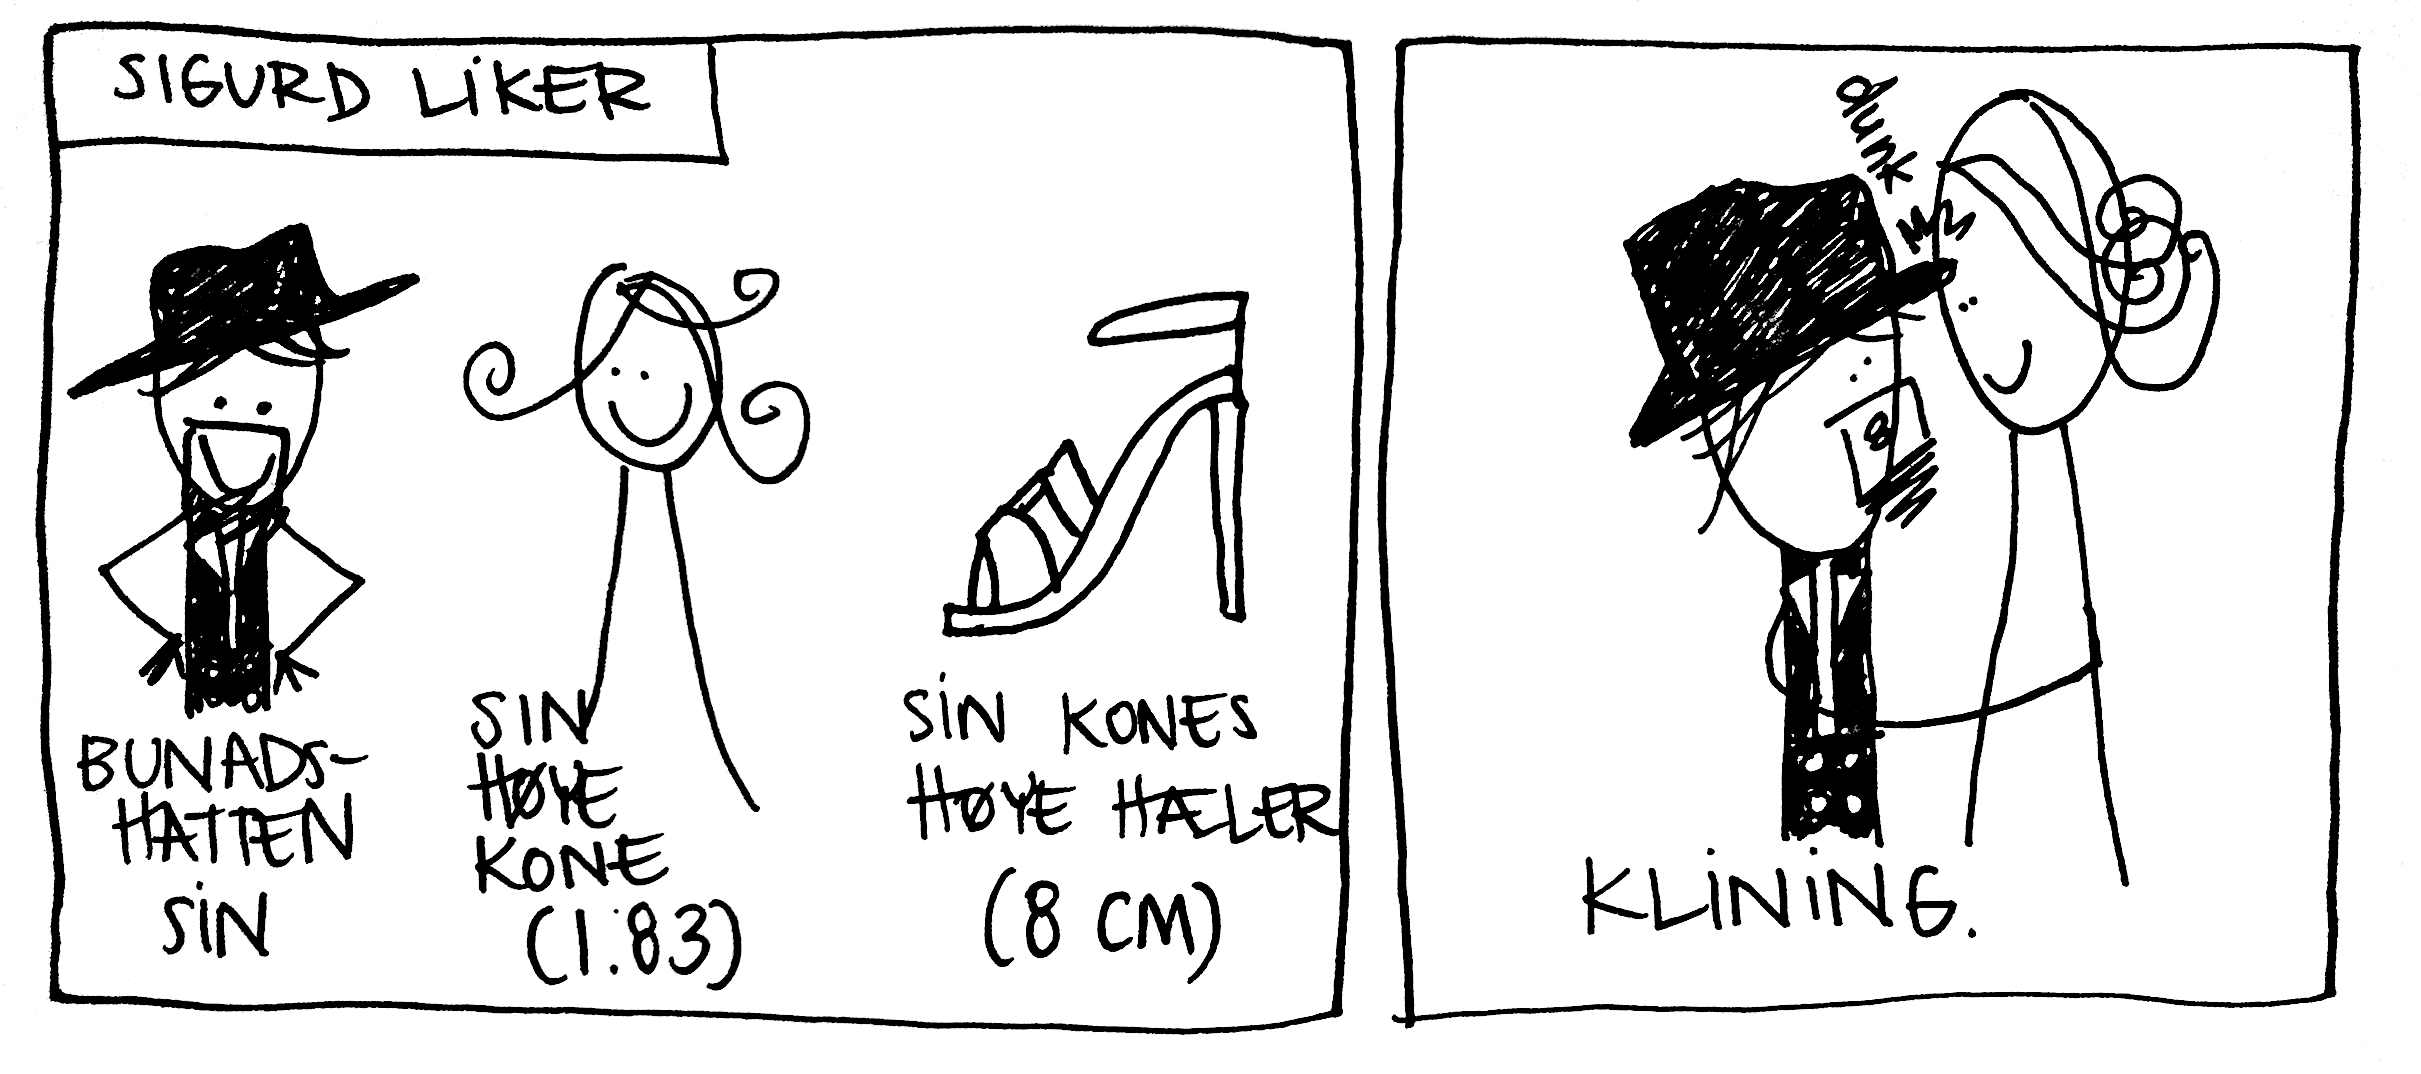 Sigurd liker: Bunadshatten sin. Sin høye kone (1.83) Sin kones høye hæler (8 cm). Klining